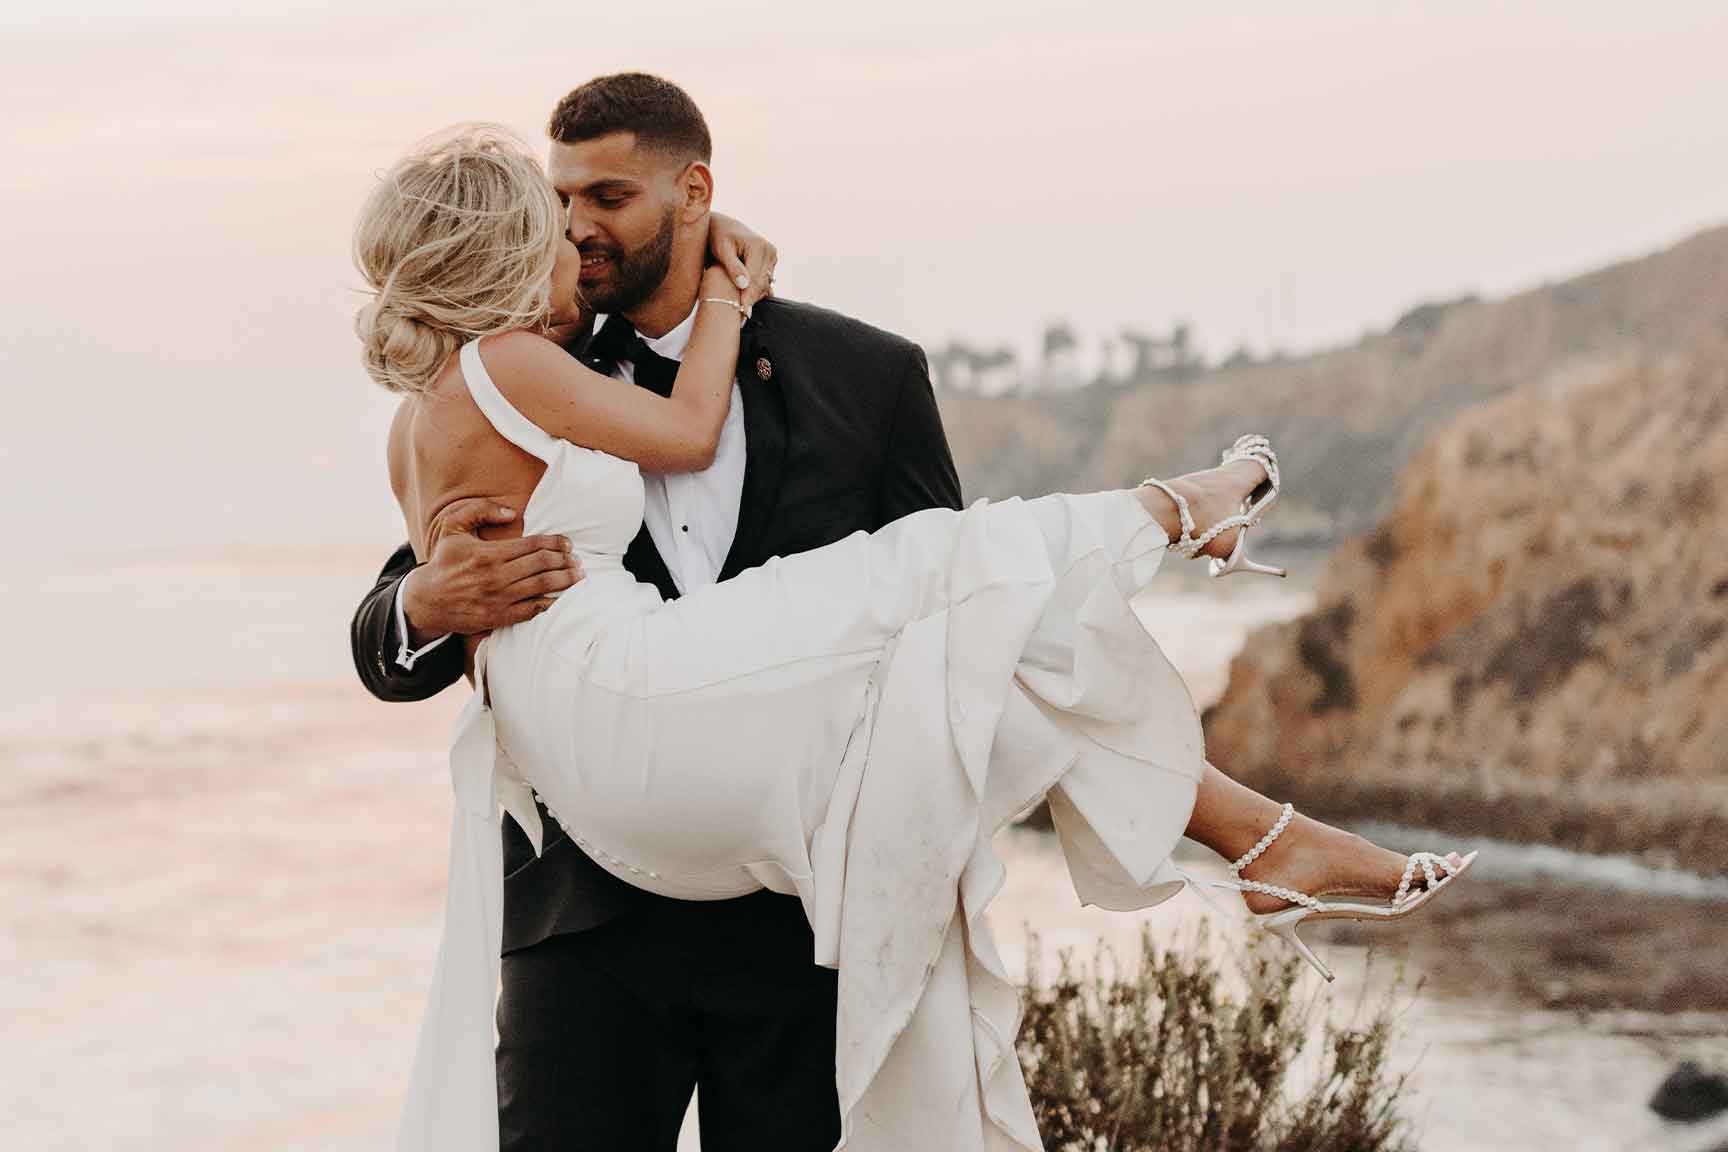 Groom holding bride with ocean coastline in background